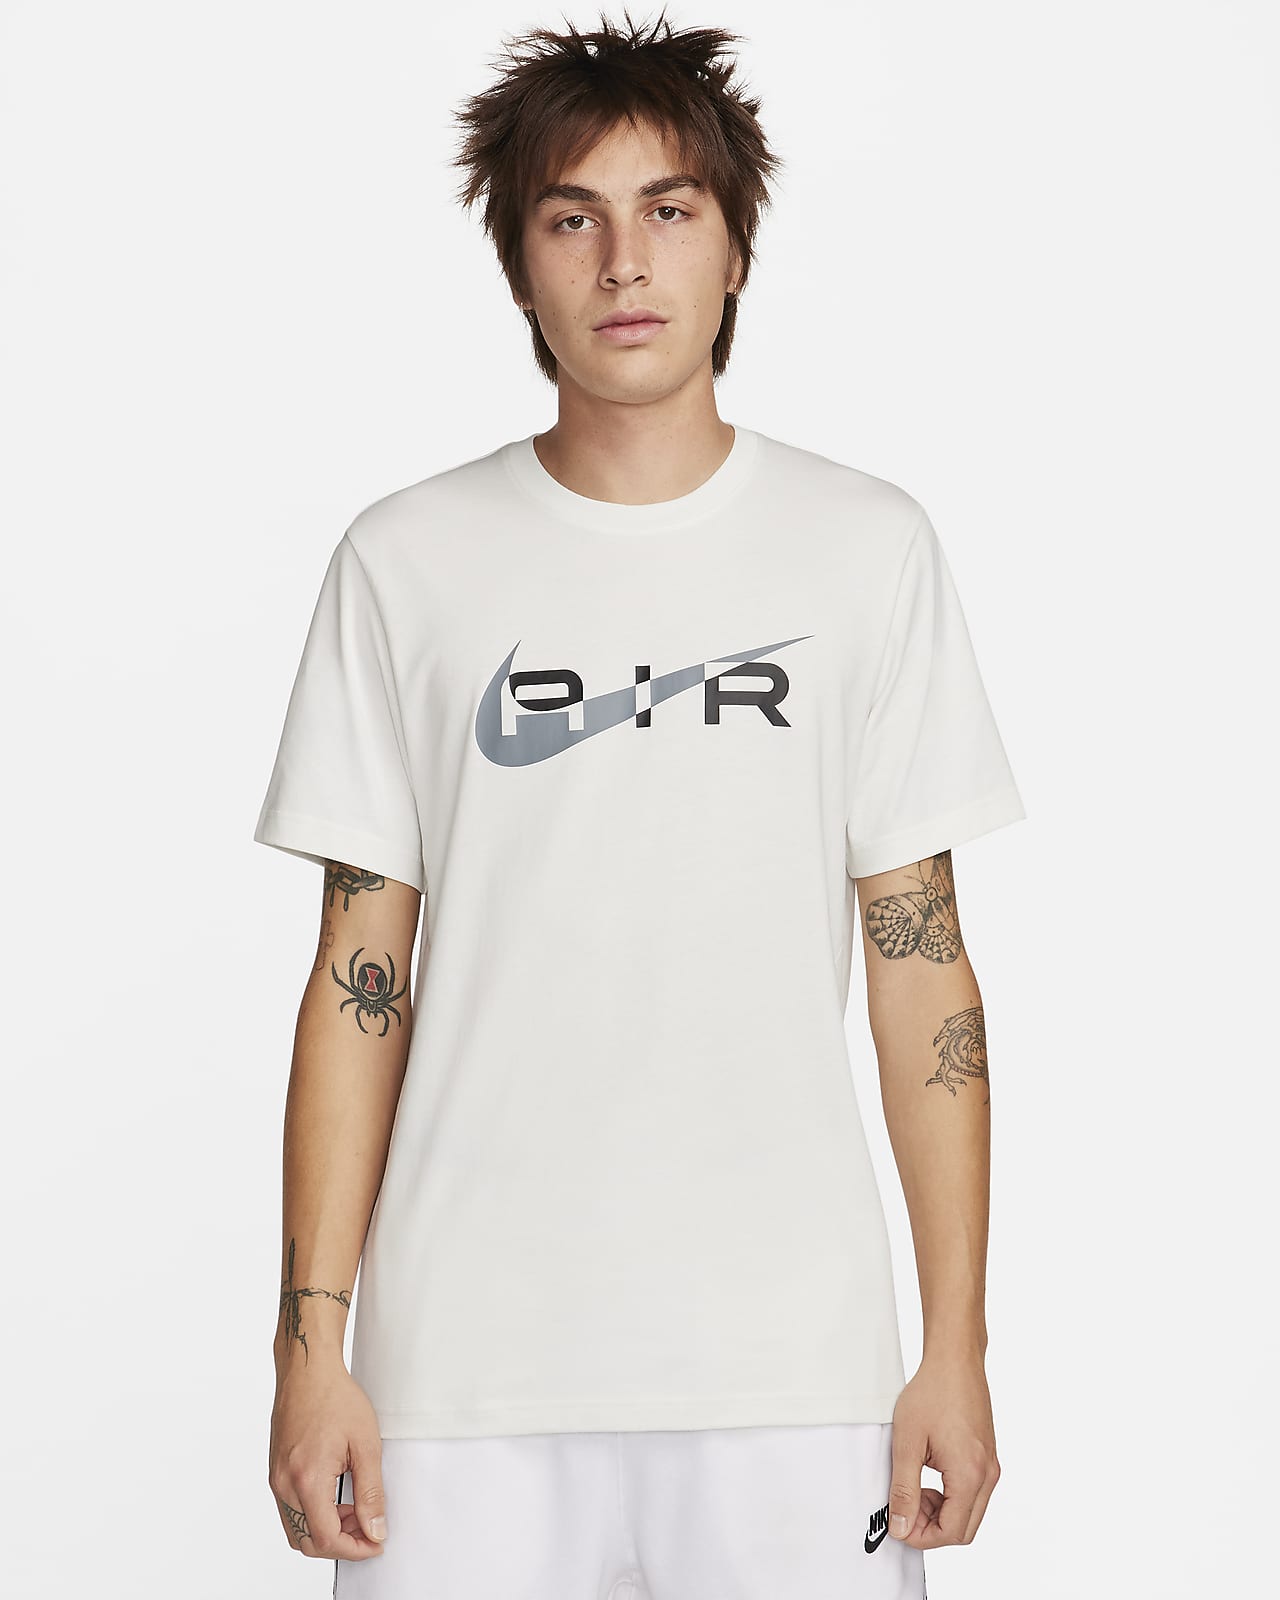 Nike Air Men's Graphic T-Shirt